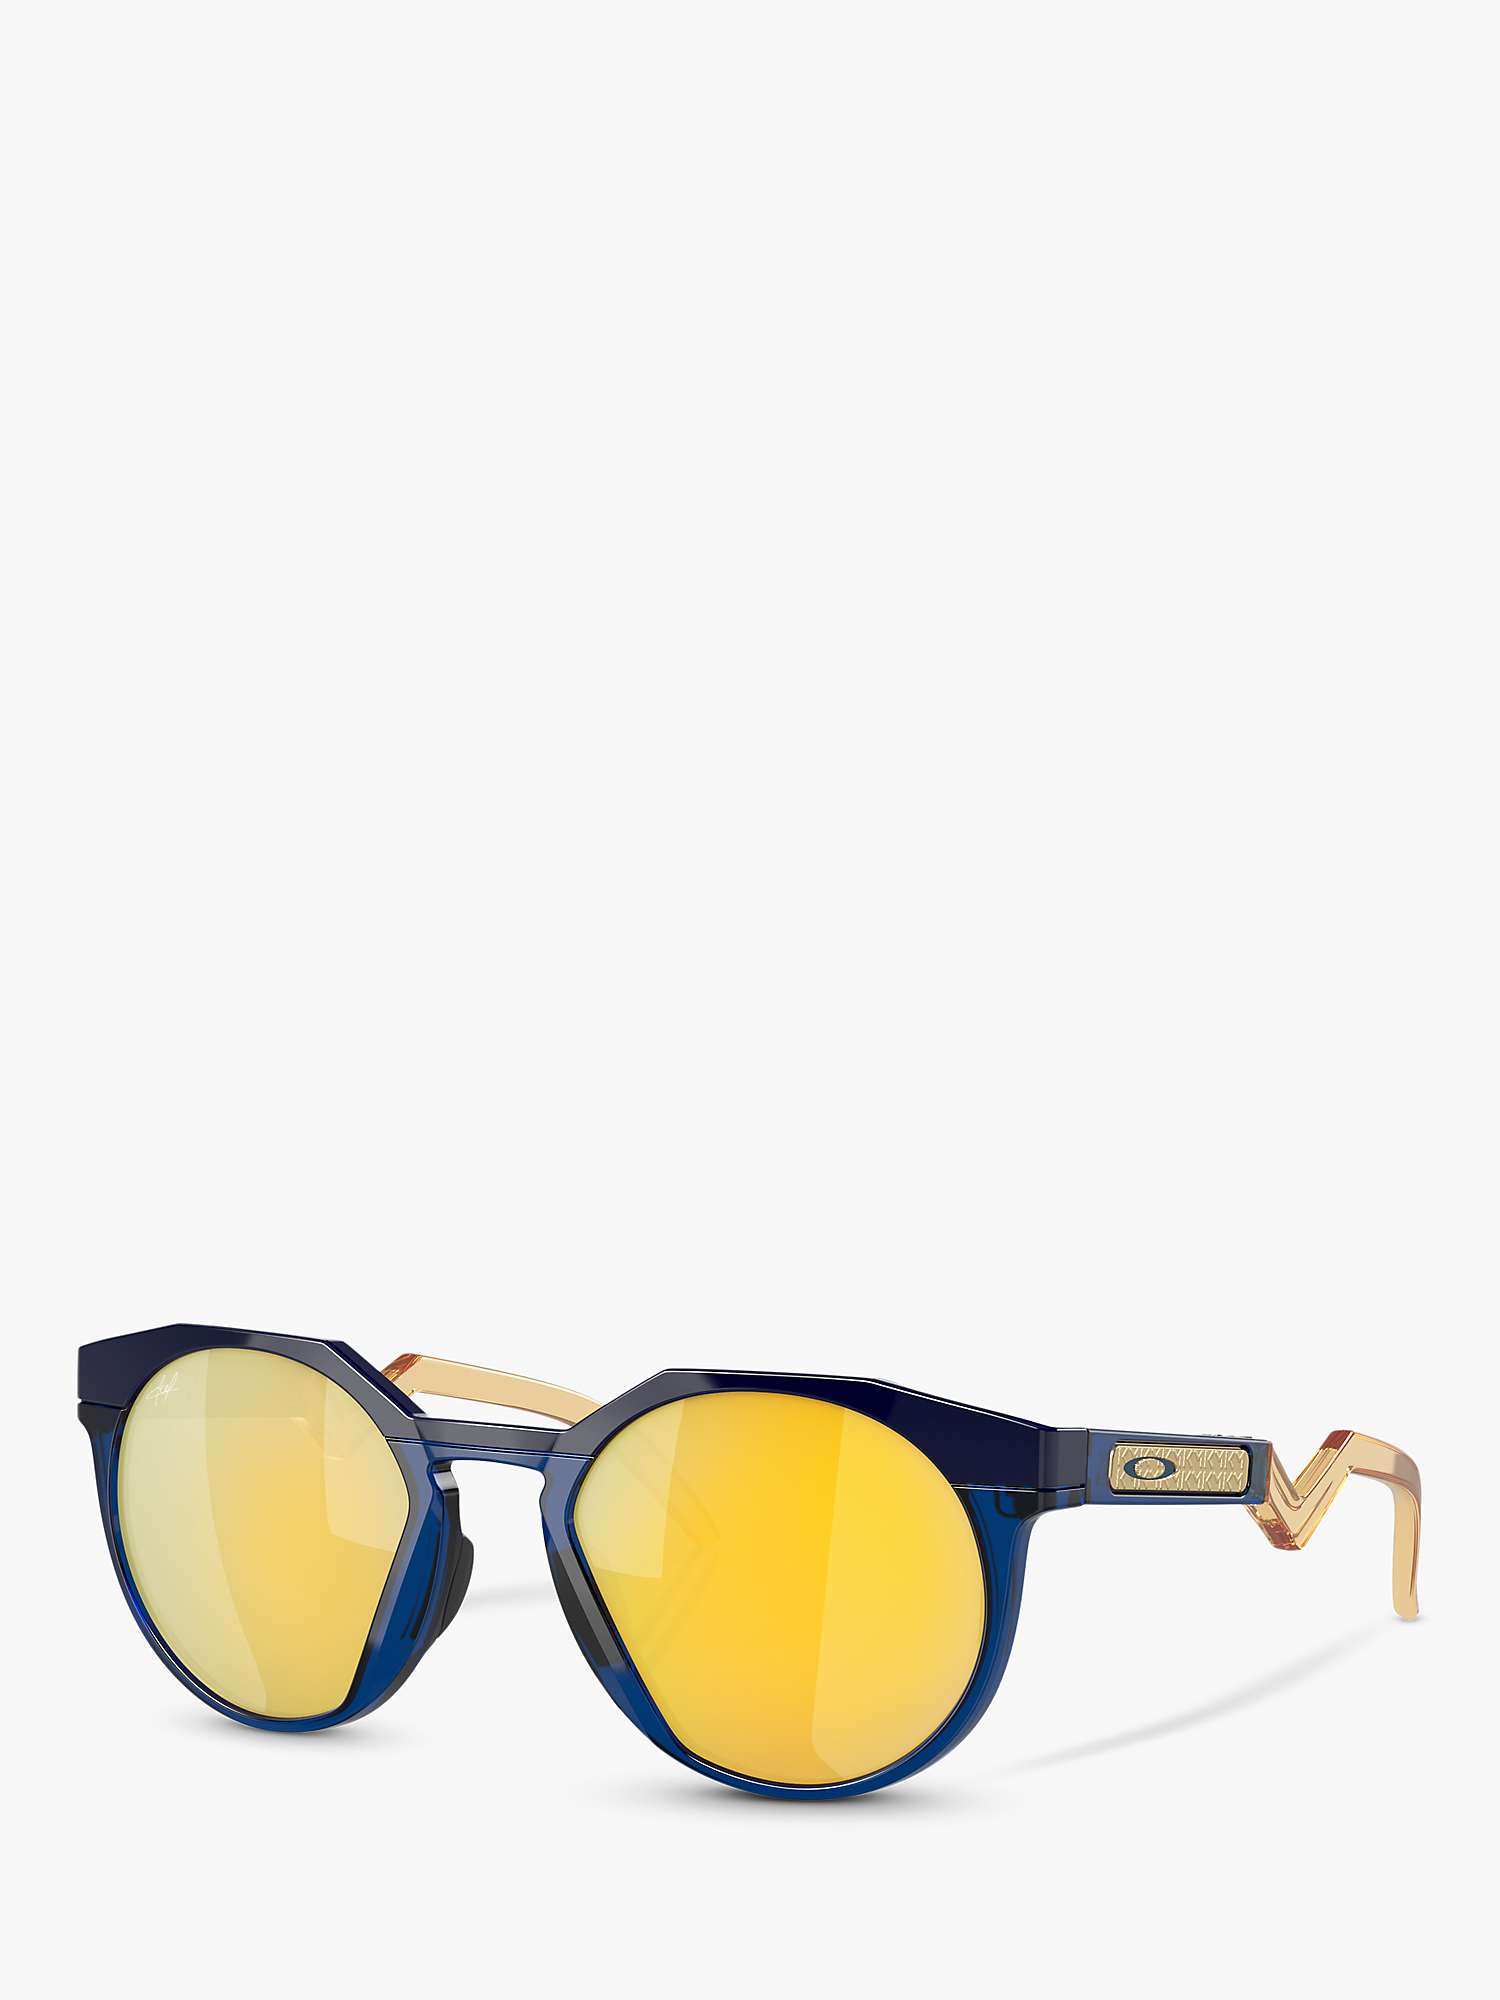 Buy Oakley OO9242 Men's Polarised Round Sunglasses, Navy/Transparent Blue Online at johnlewis.com